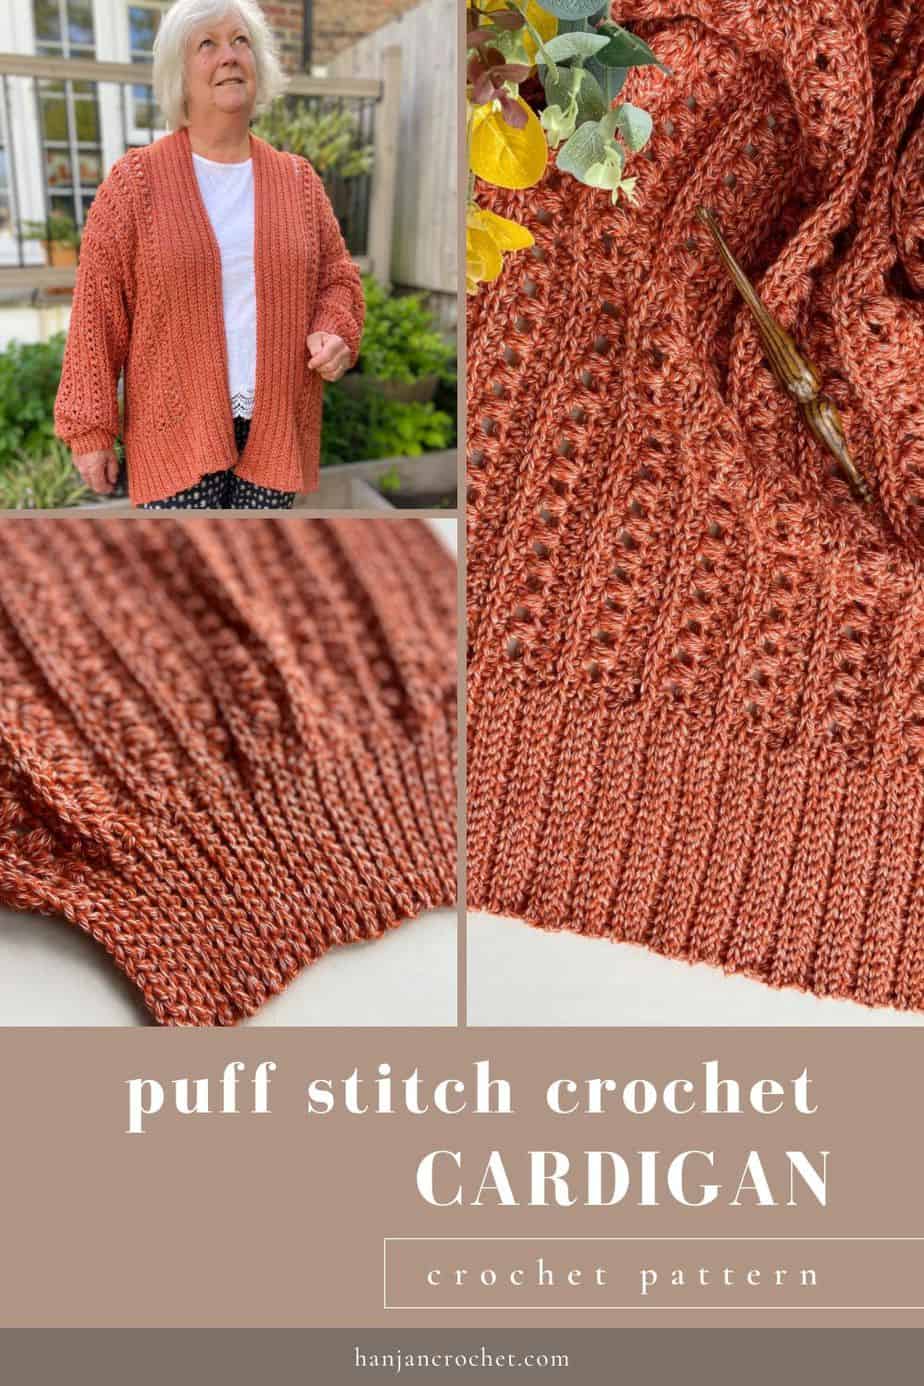 puff stitch crochet cardigan pattern in spice colour